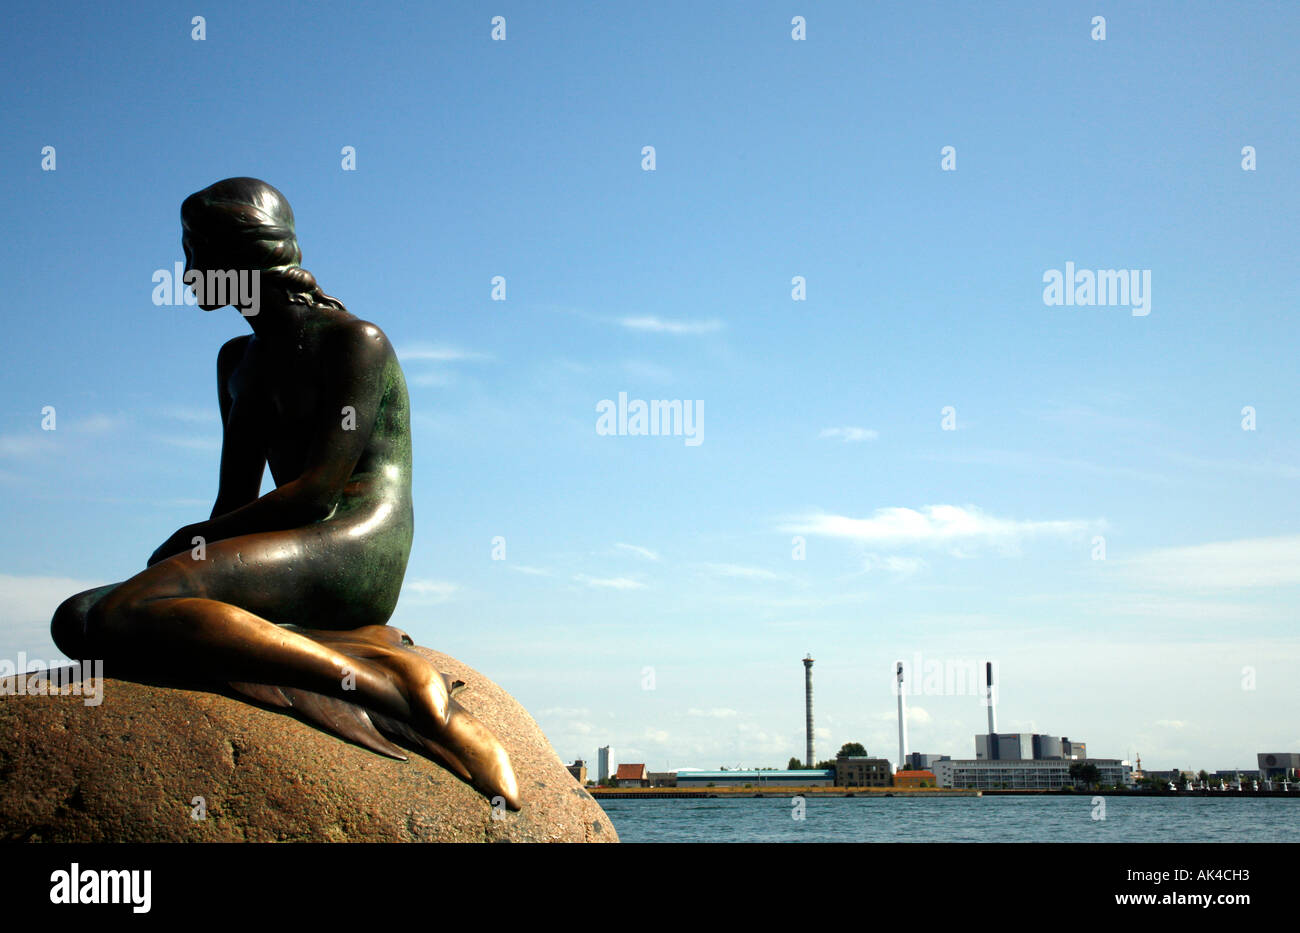 La sirenita de Copenhague, Dinamarca Foto de stock